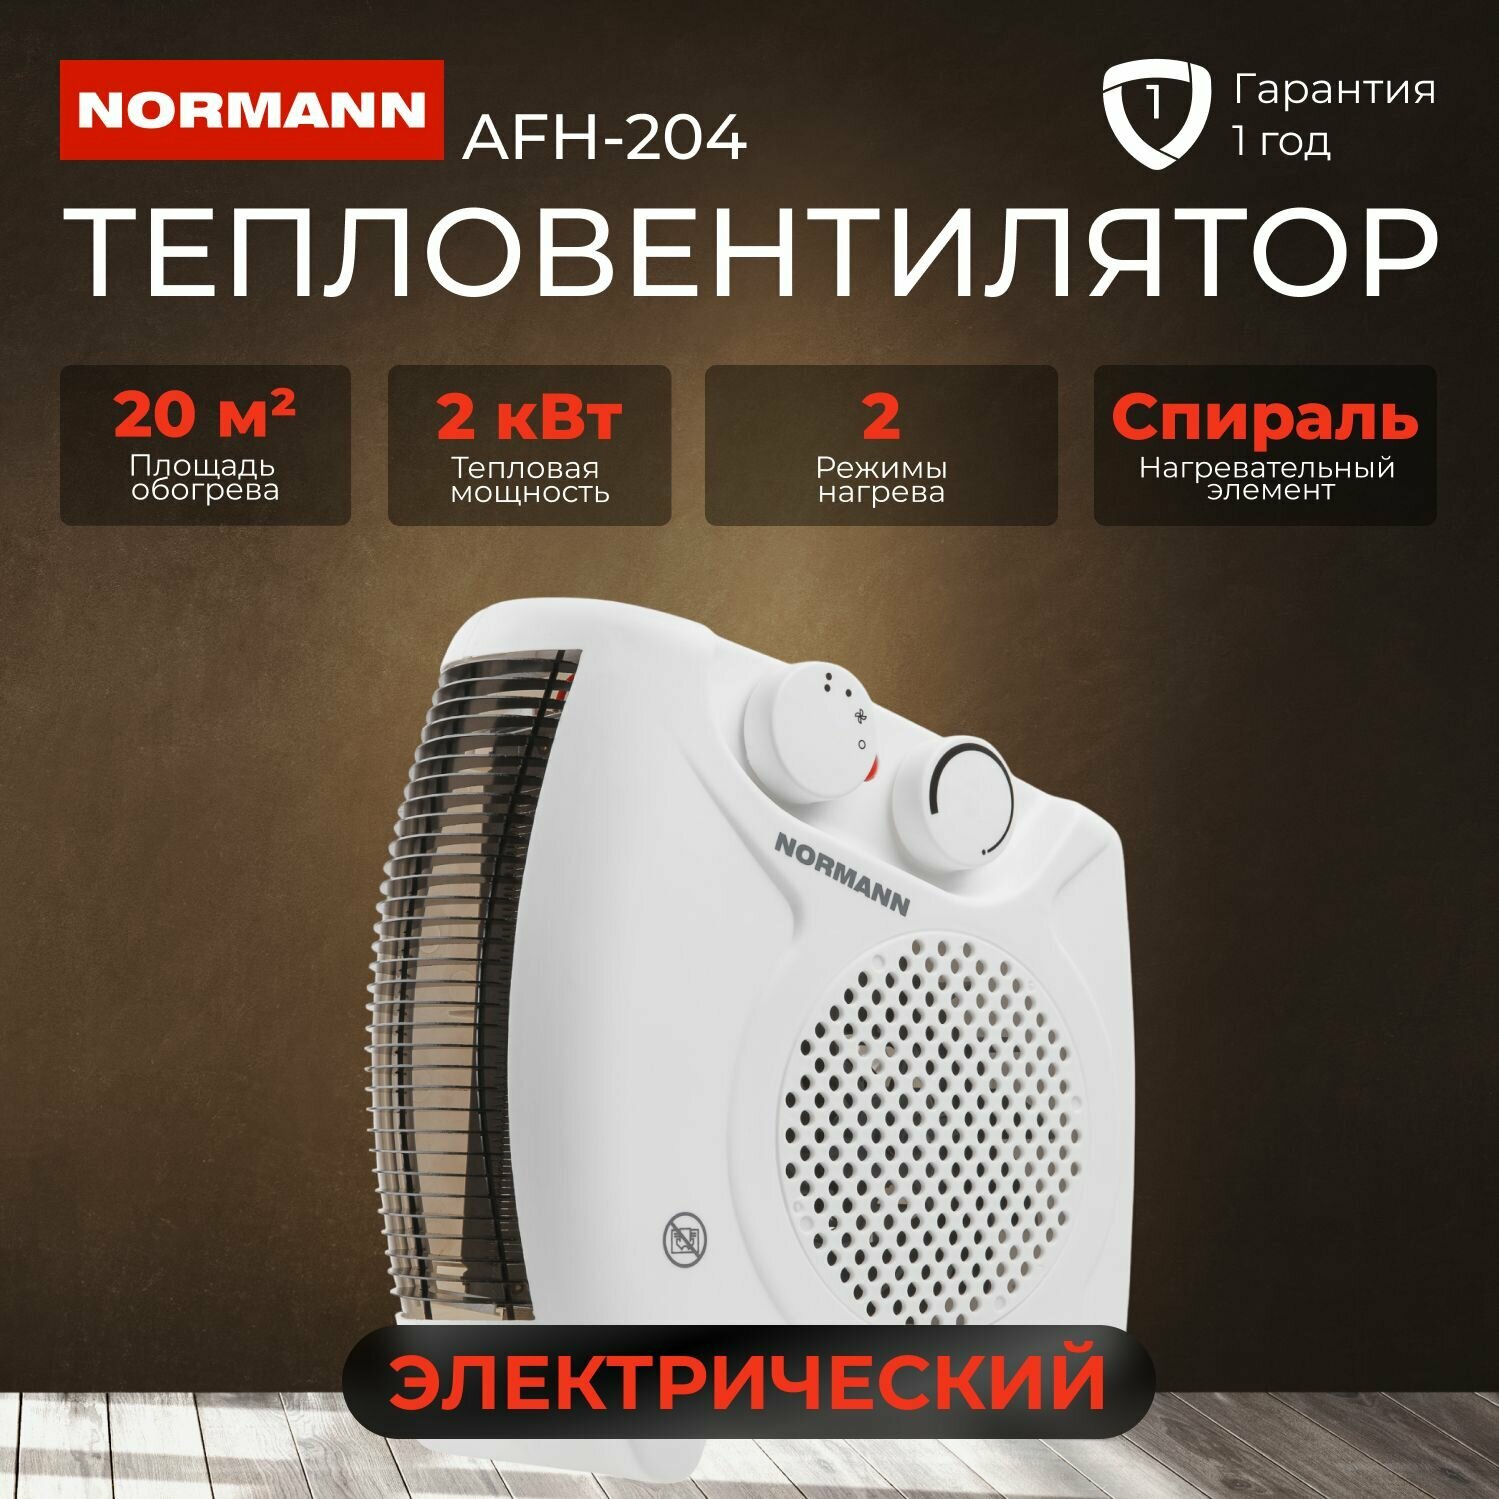 Тепловентилятор NORMANN AFH-204